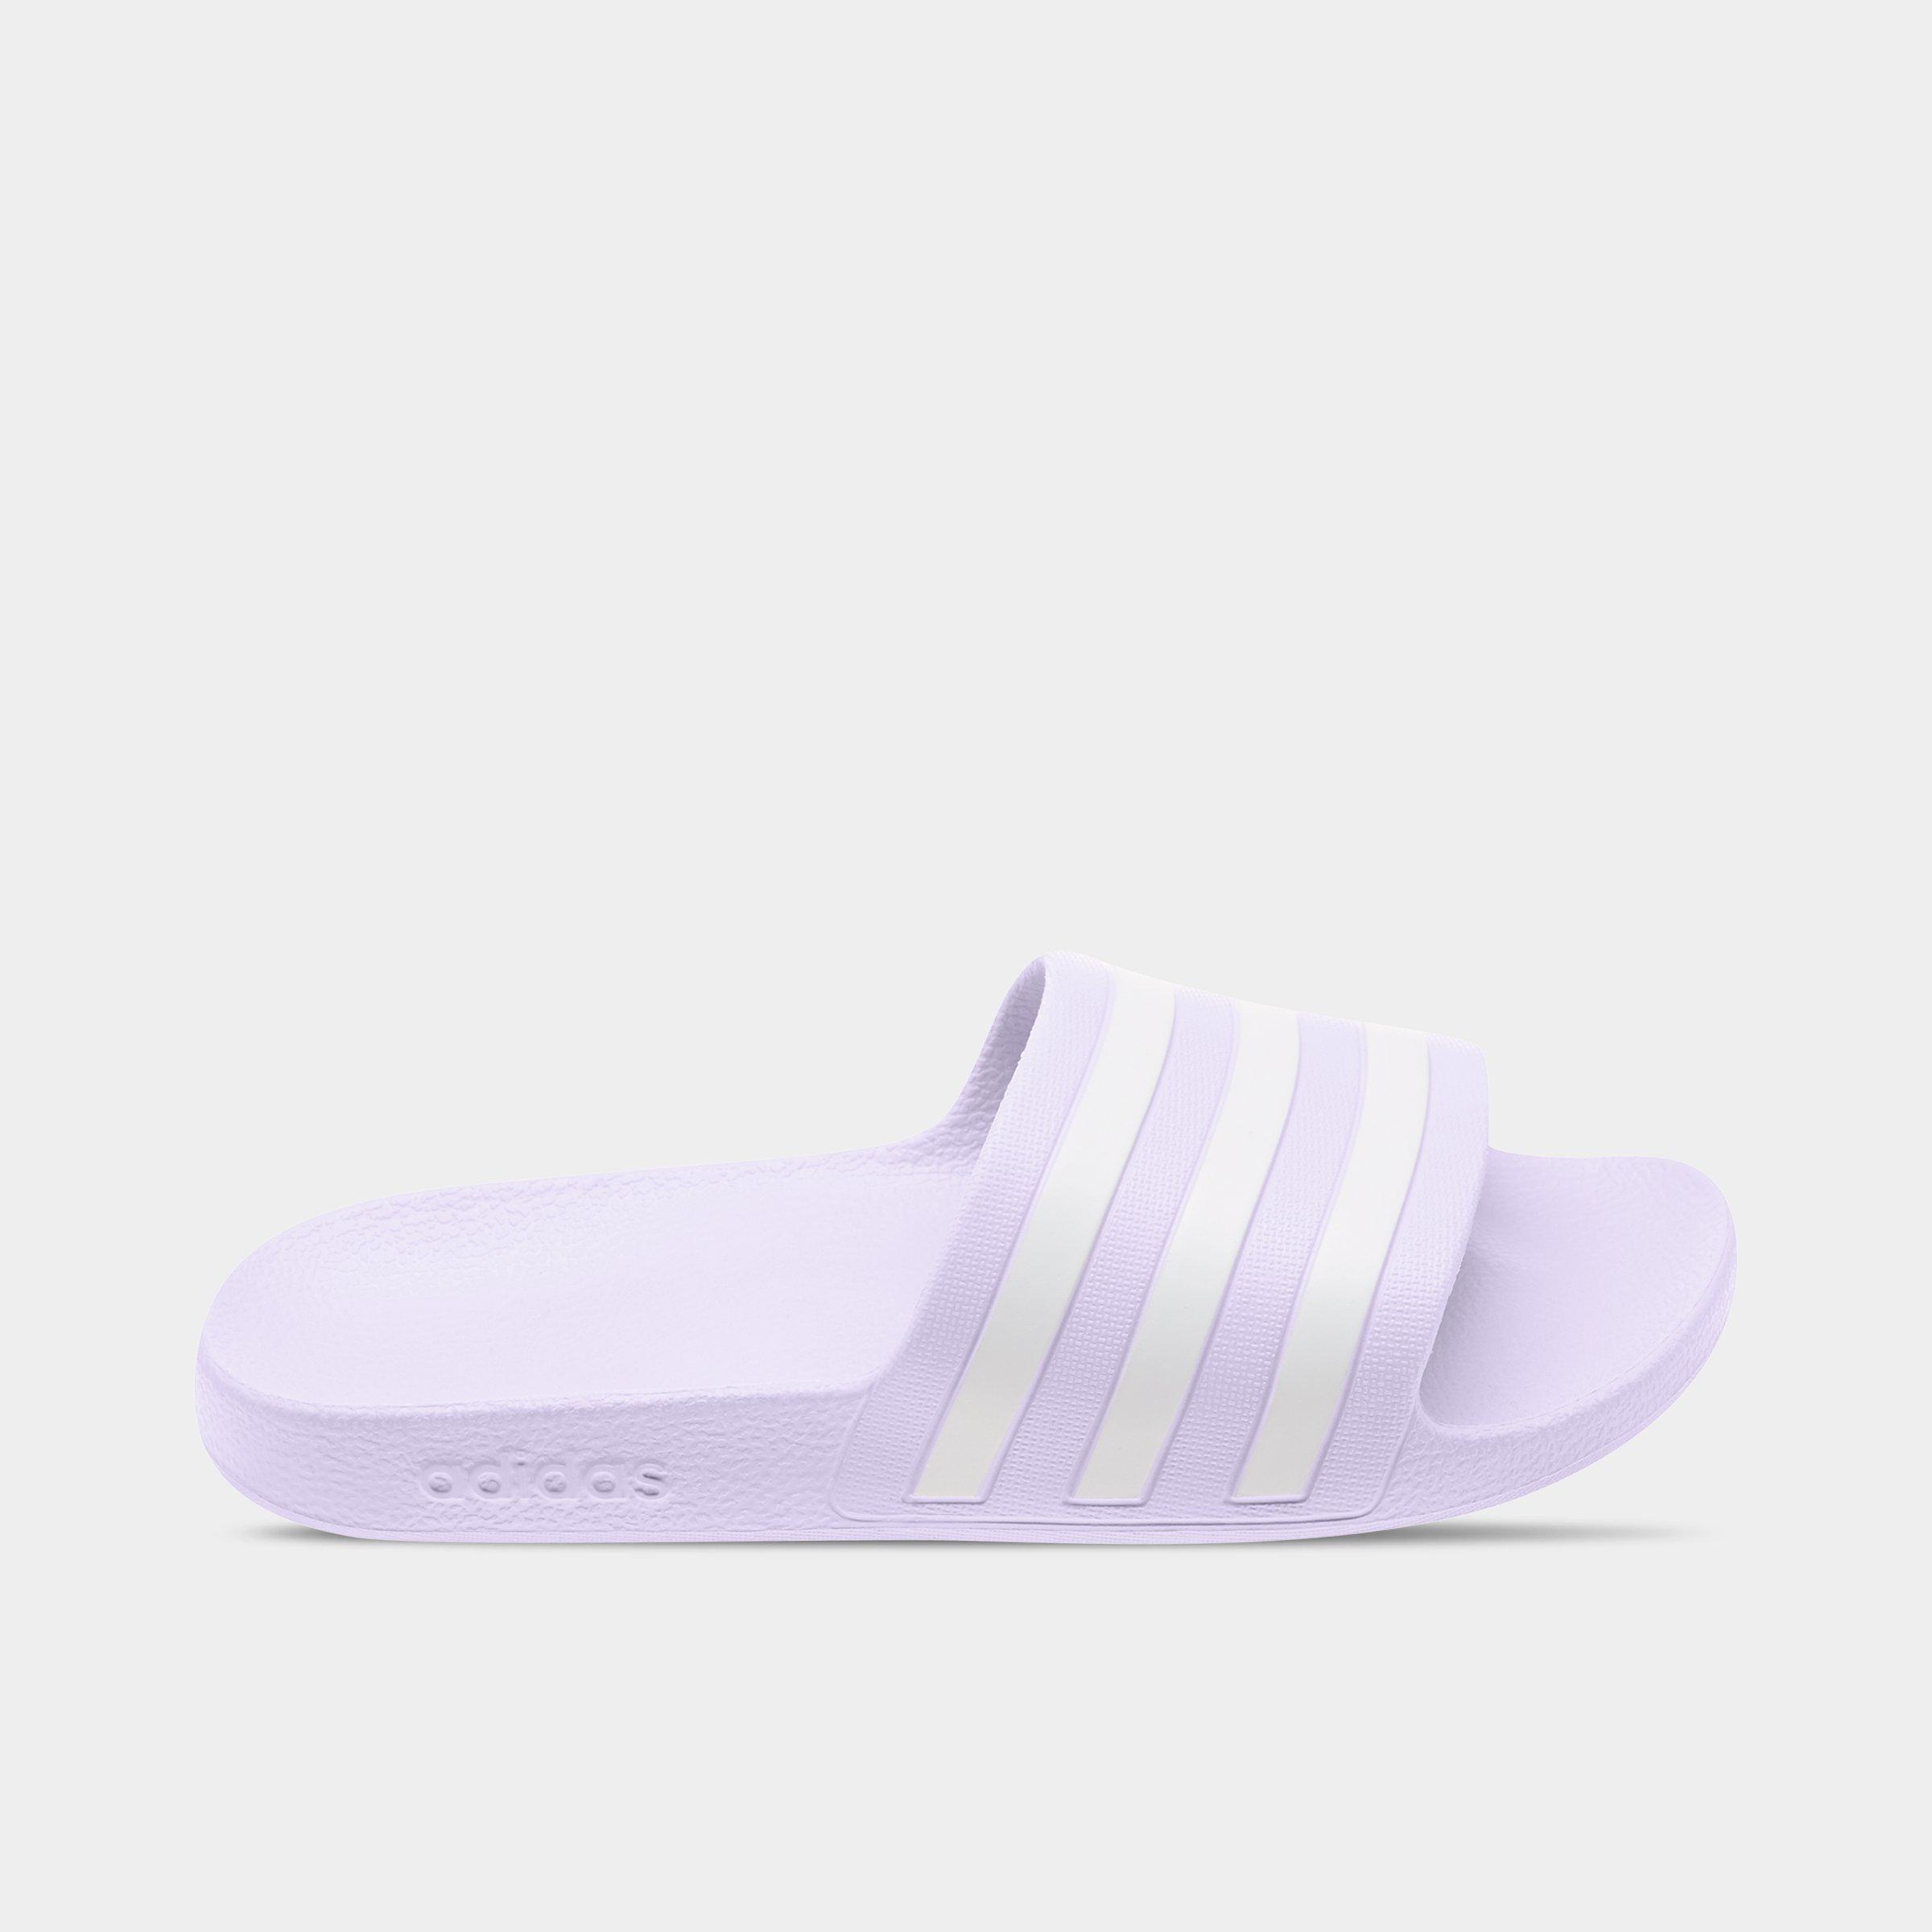 adidas sandals purple